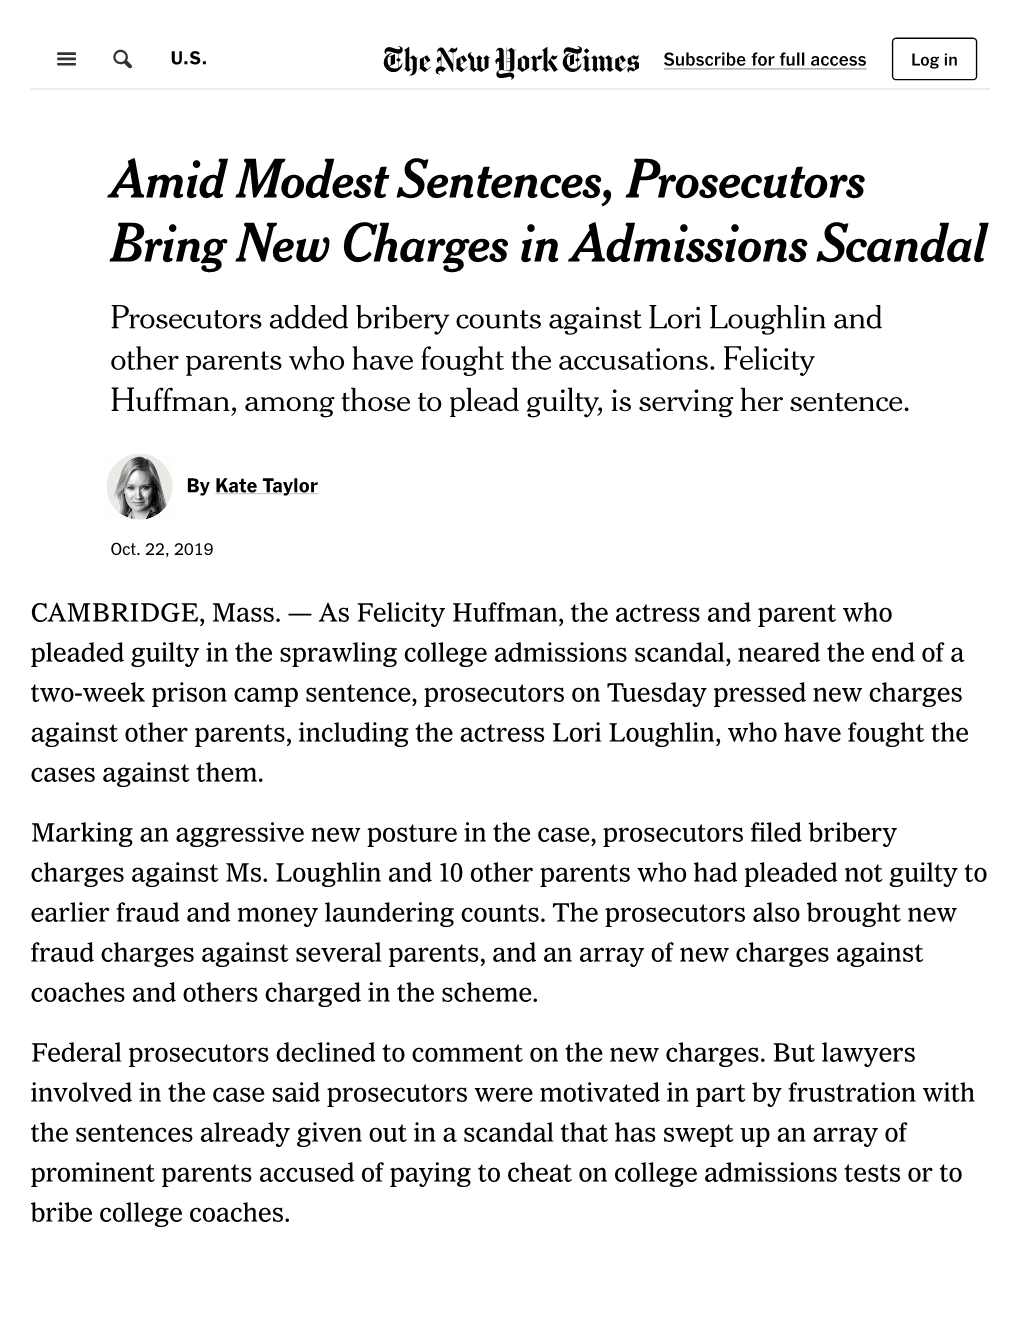 Amid Modest Sentences, Prosecutors Bring New